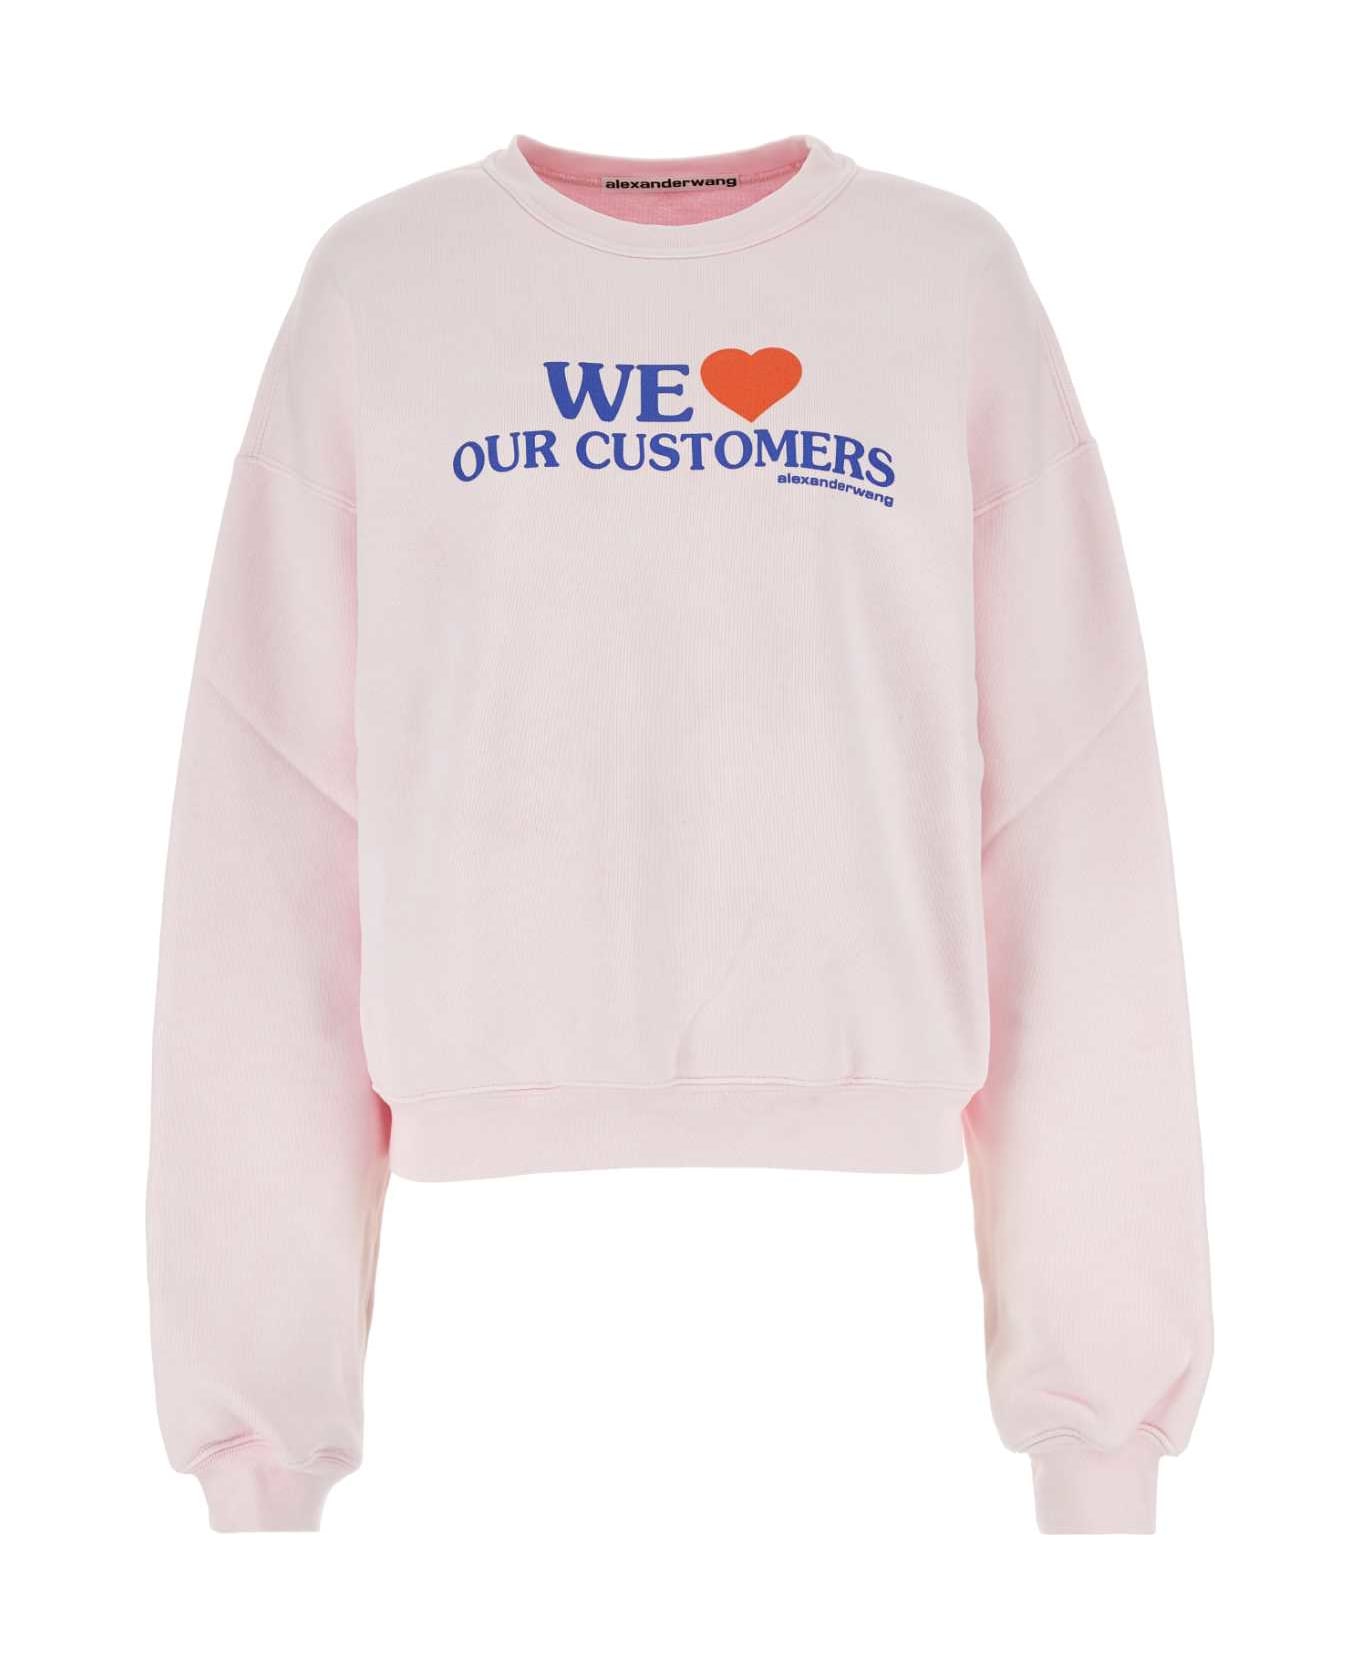 Alexander Wang Pastel Pink Cotton Sweatshirt - LTPINKBLEACHOUT